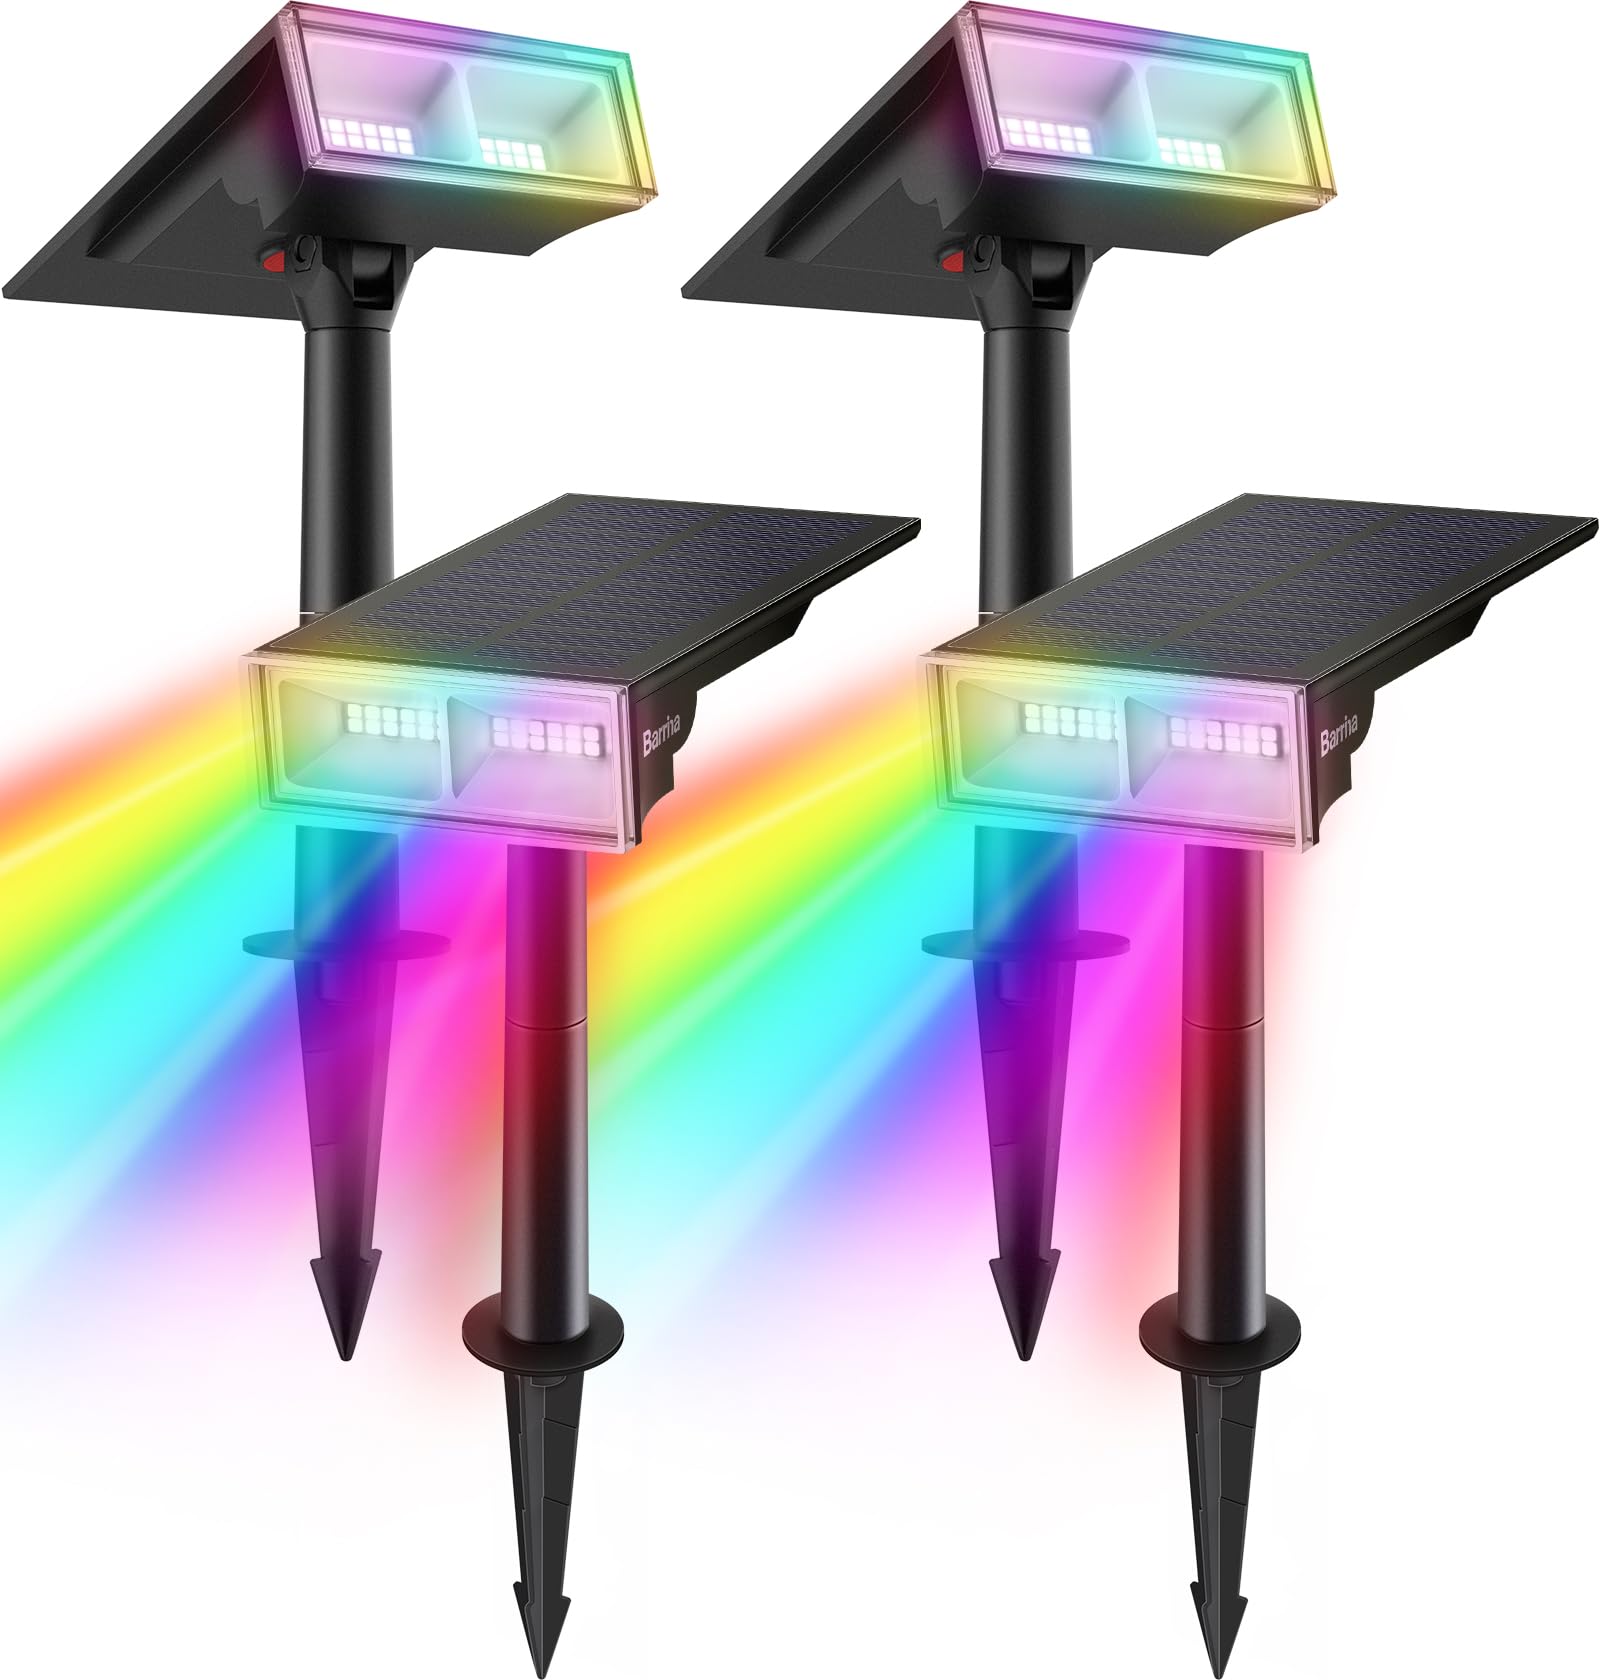 Solar Spot Lights,RGB 8 Colorful Modes,Auto ON/OFF,24 LEDs,4 Packs,TYN RGB 4